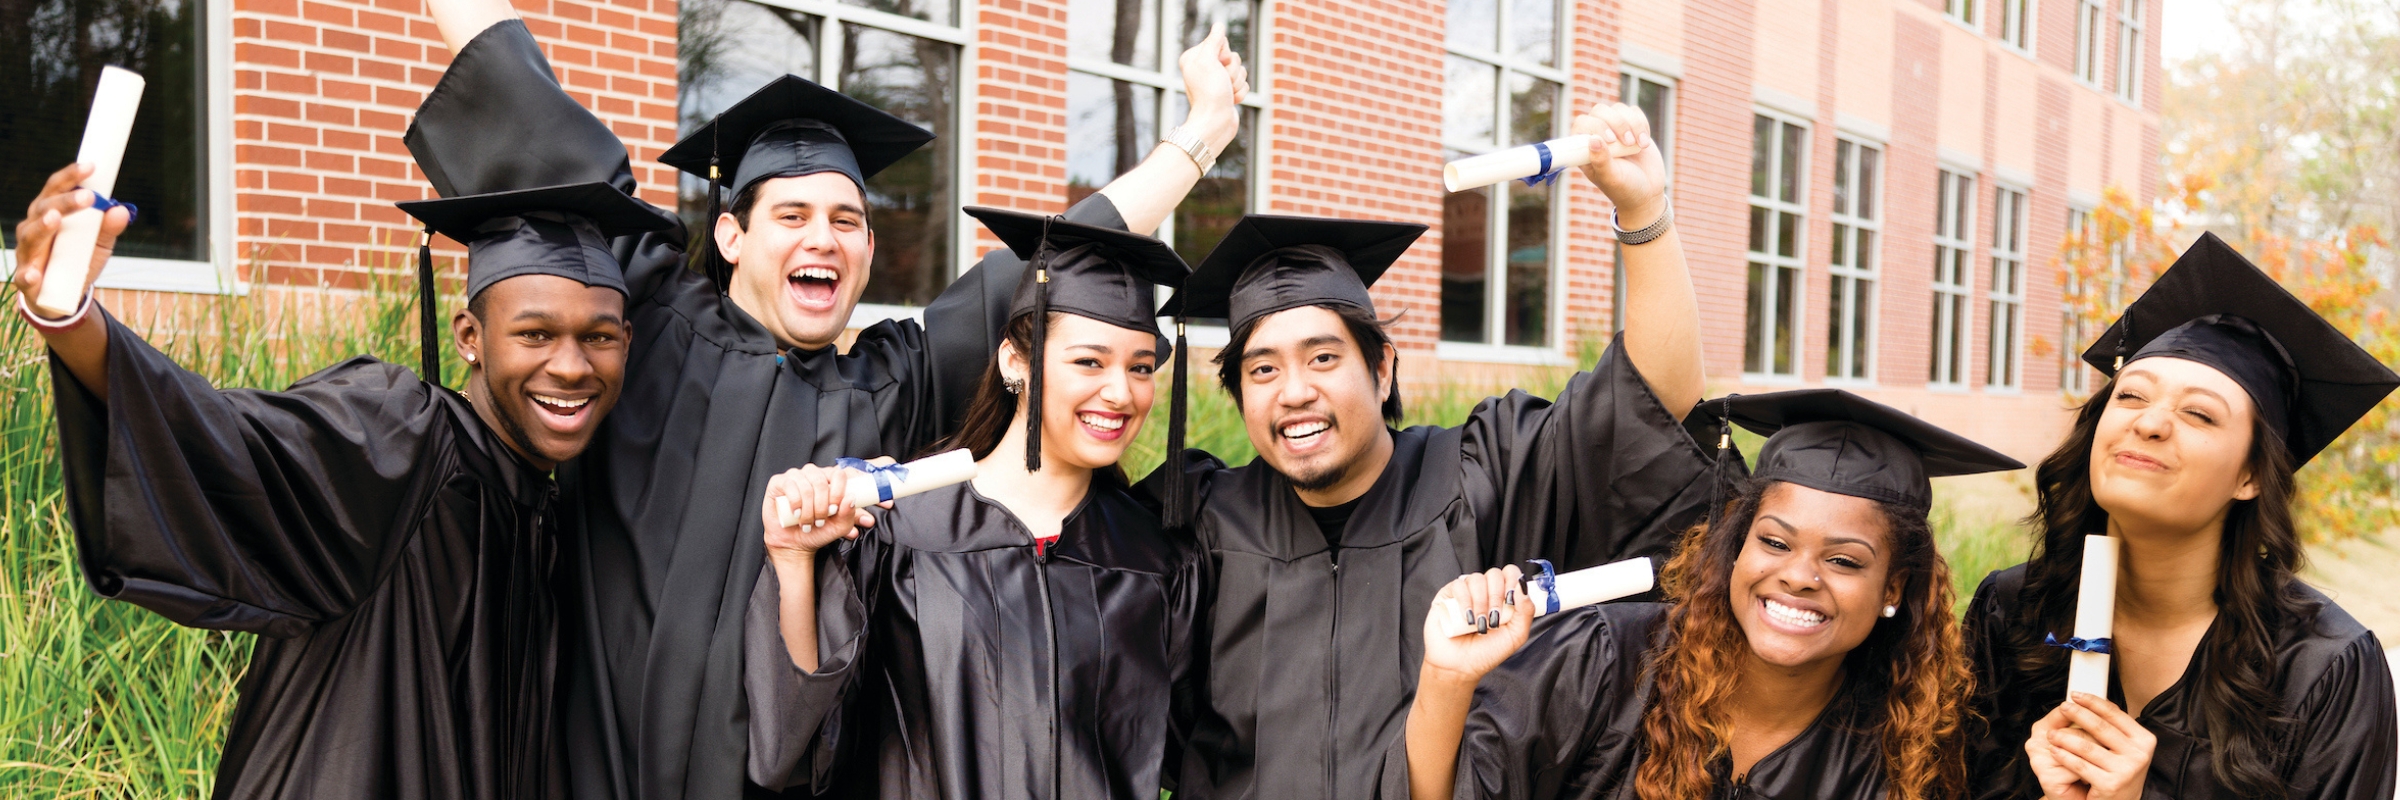 graduates in graduation gowns holding diplomas